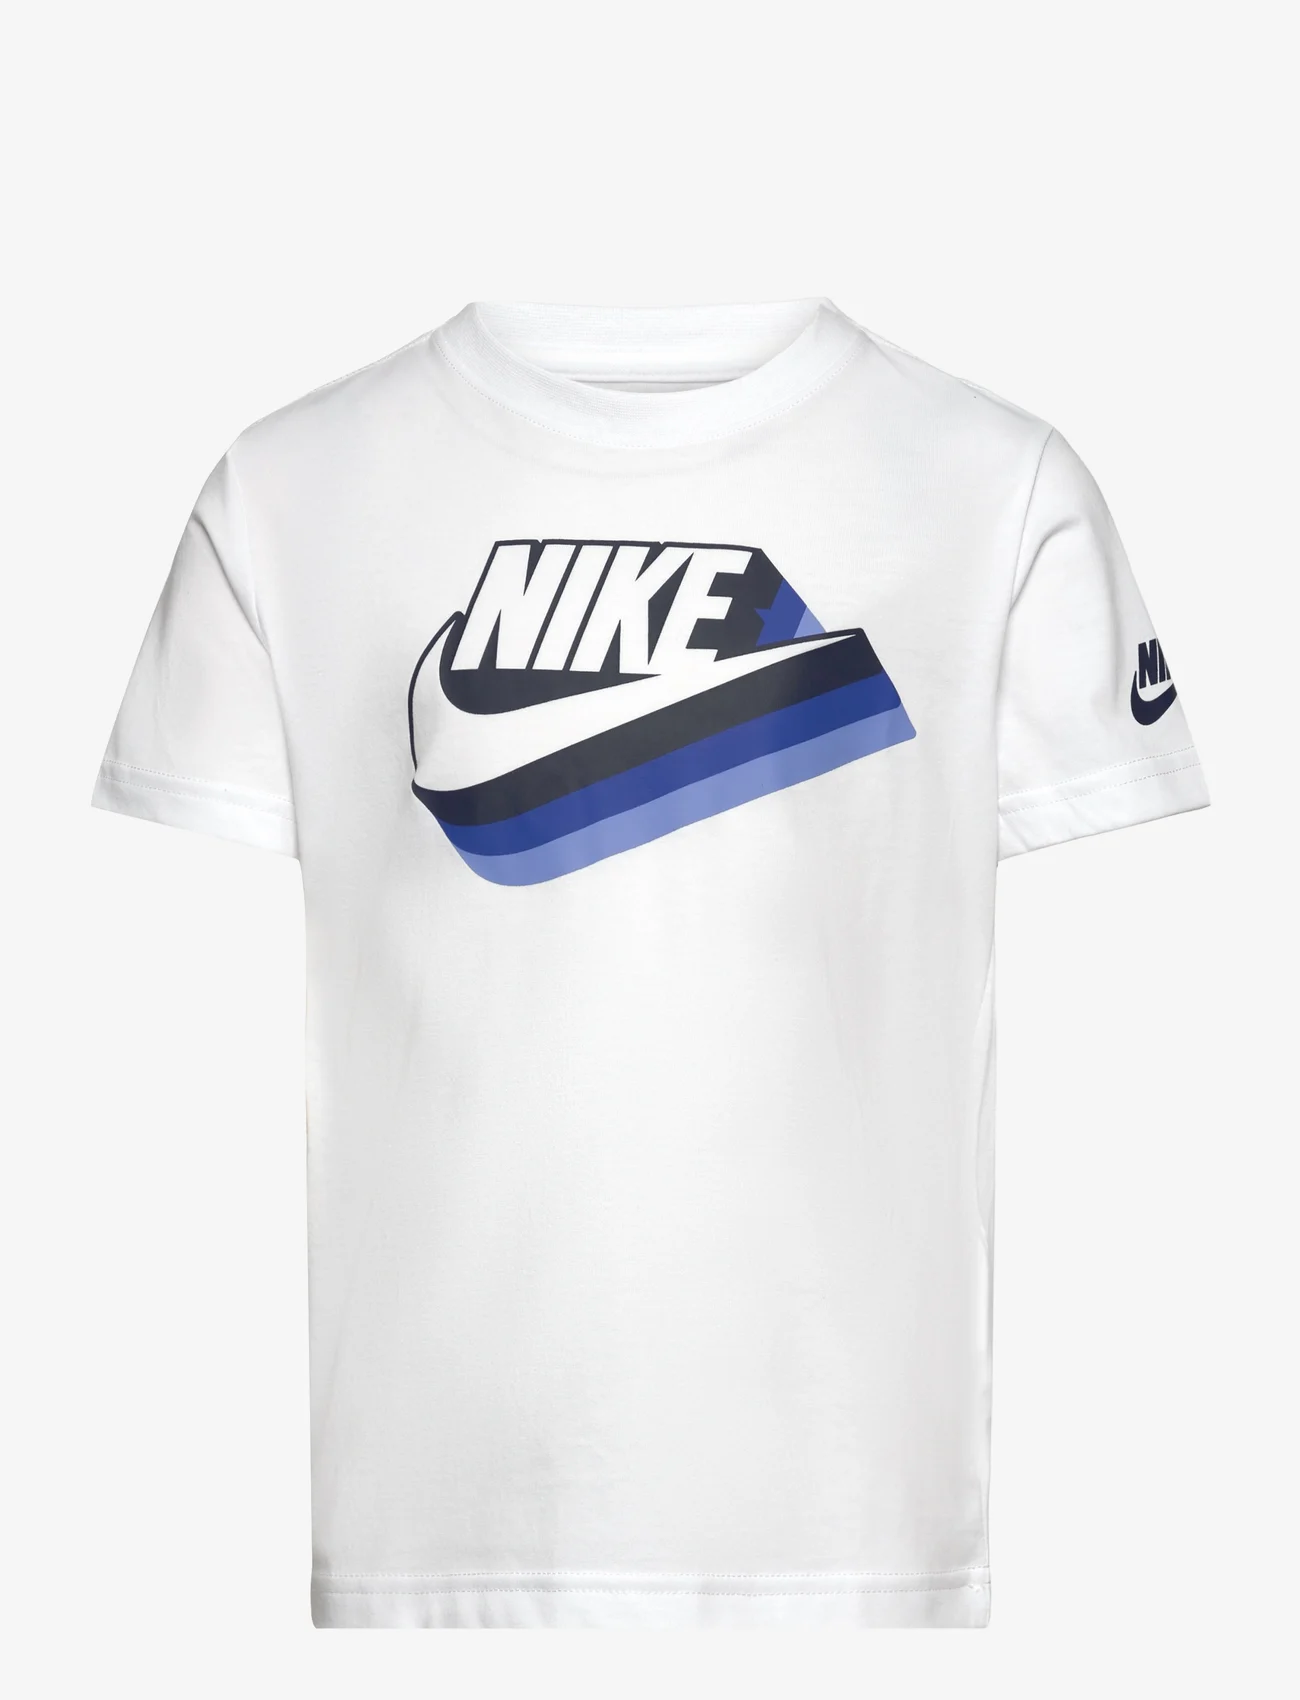 Nike - NKB GRADIENT FUTURA SS TEE / NKB GRADIENT FUTURA SS TEE - kurzärmelig - white - 0